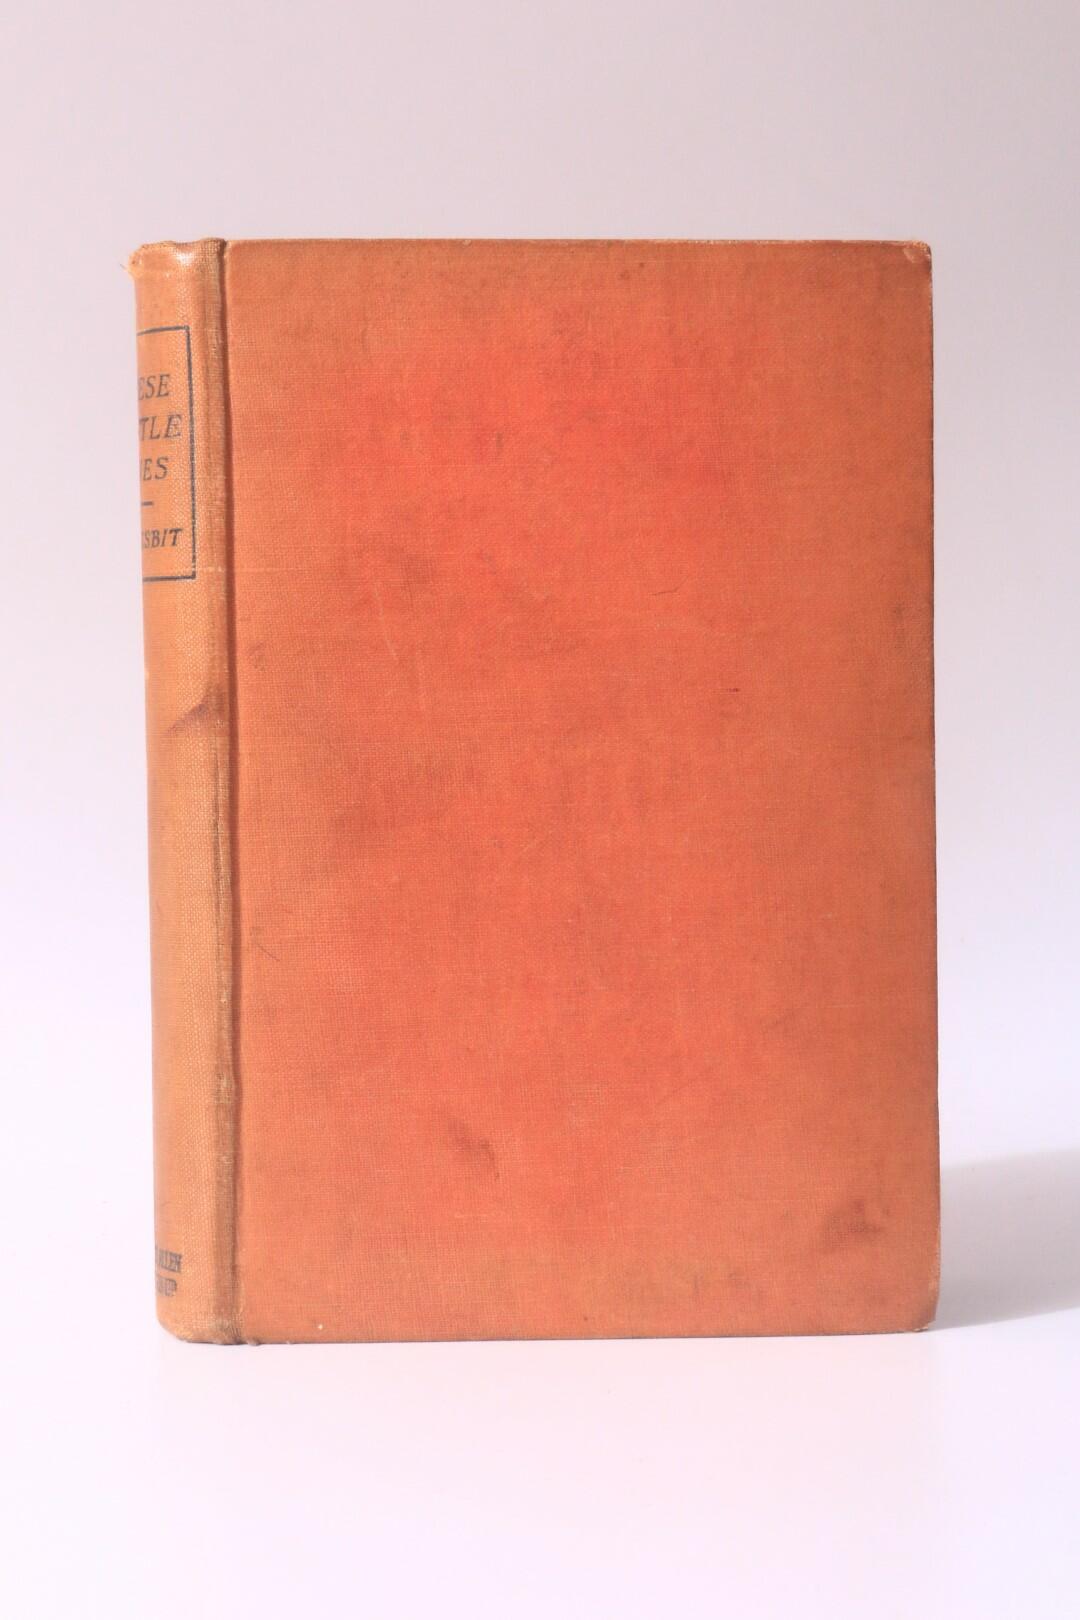 E. Nesbit - These Little Ones - George Allen & Unwin, 1909, First Edition.